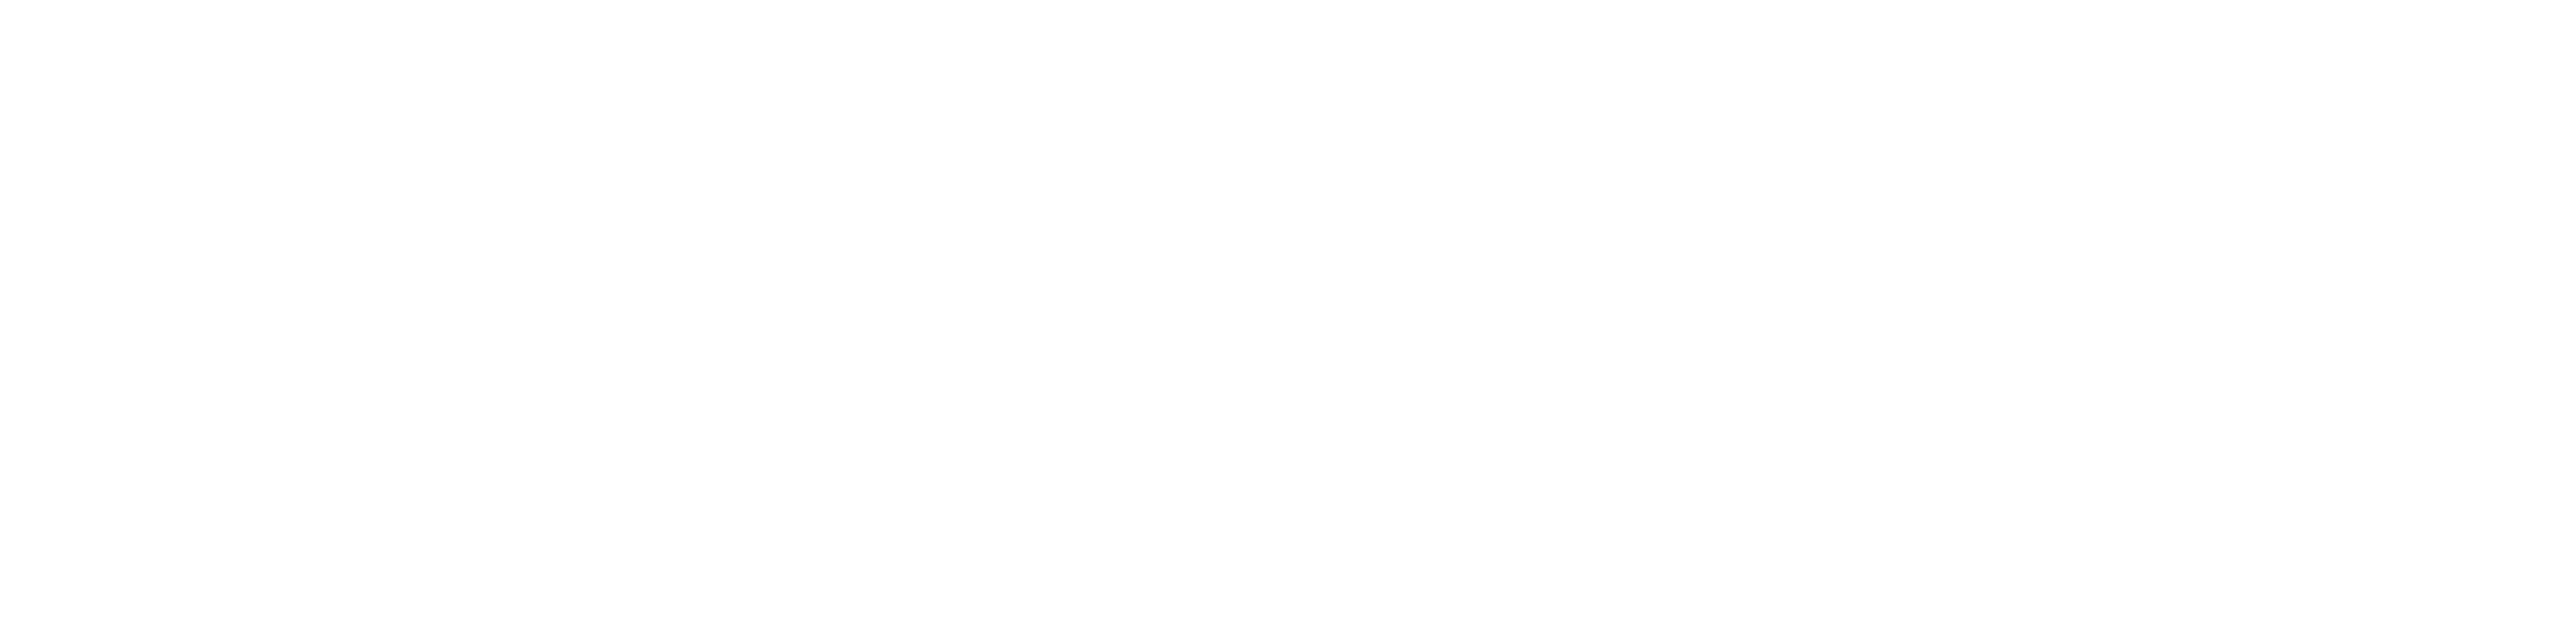 90-konto svensk insamlingskontroll